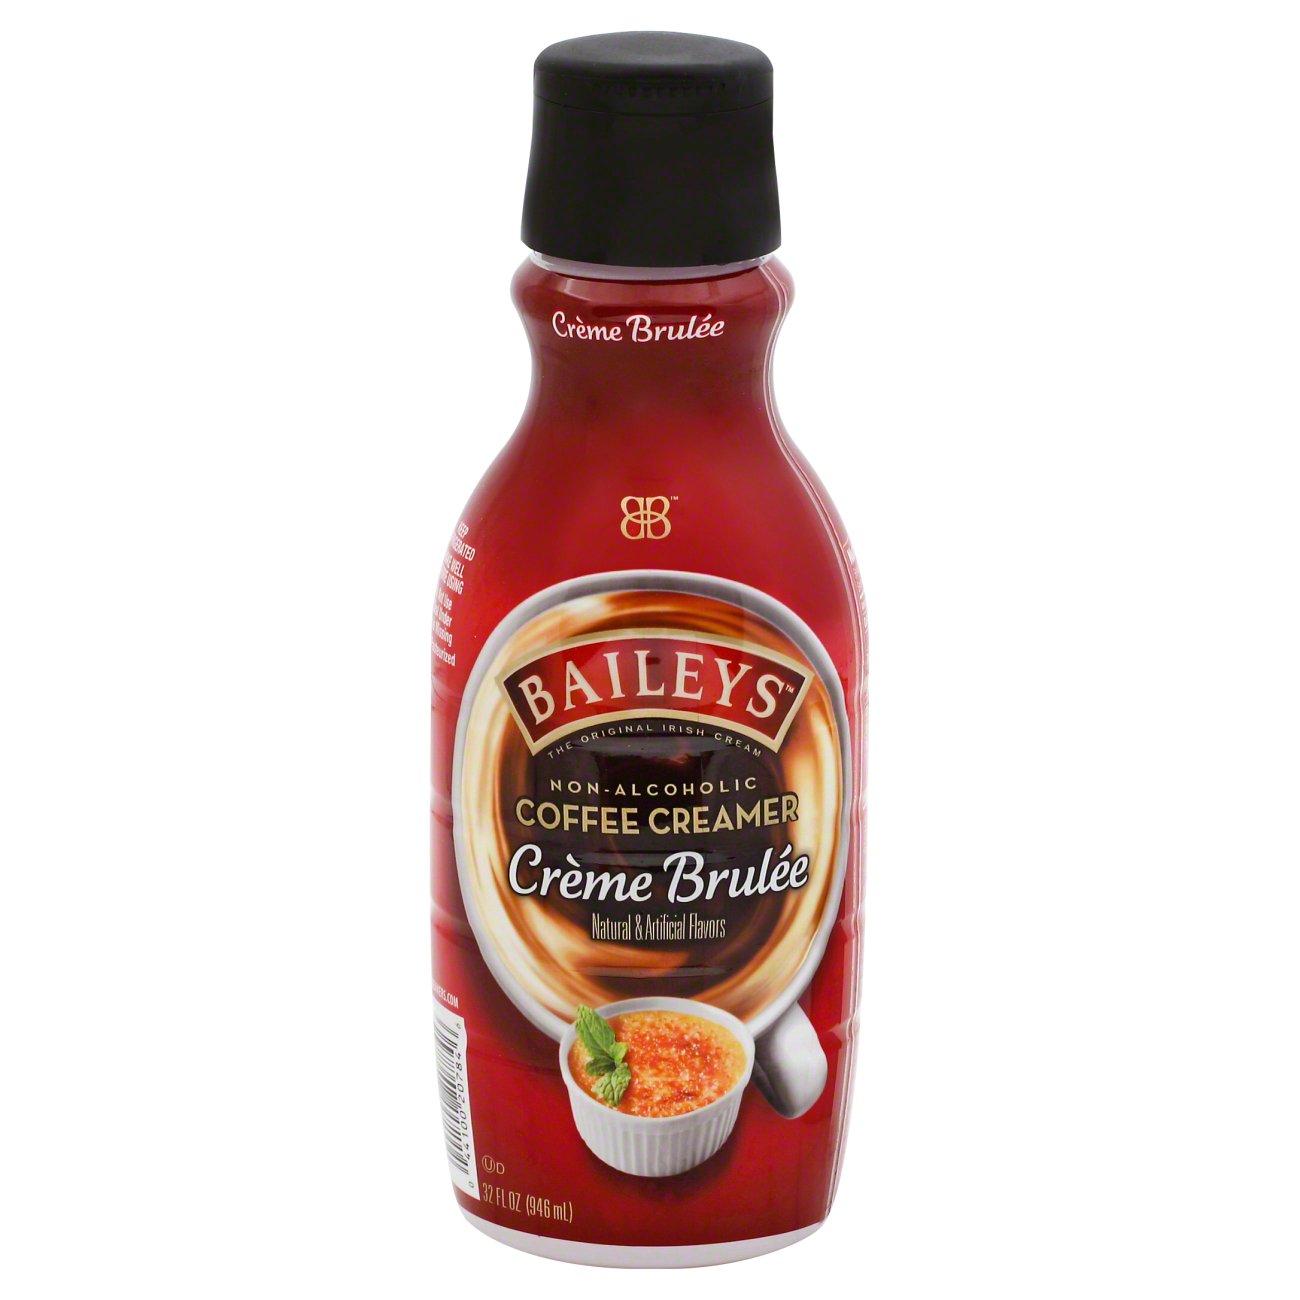 Baileys Creme Brulee Coffee Creamer - Shop Coffee Creamer at H-E-B